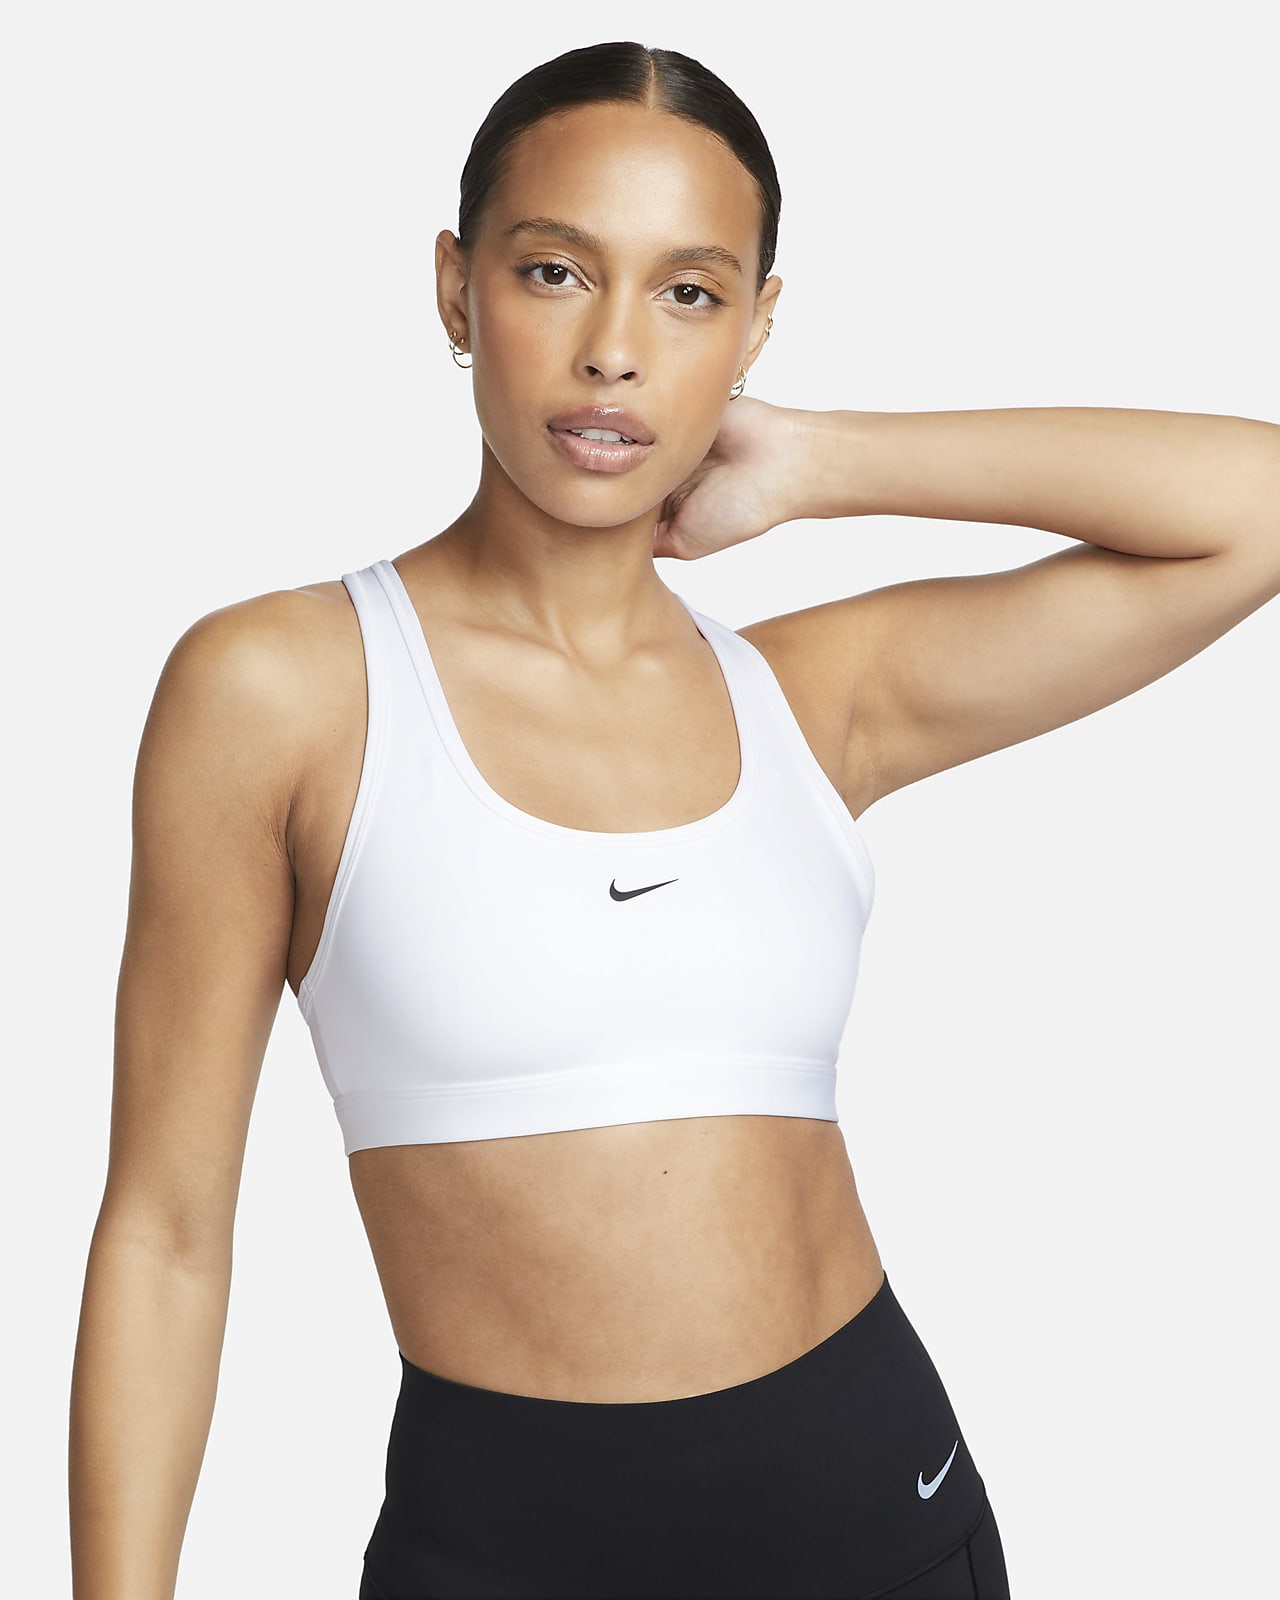 Nike I-Beam Swoosh Women's Hybrid Sports Training Gym Bra Top